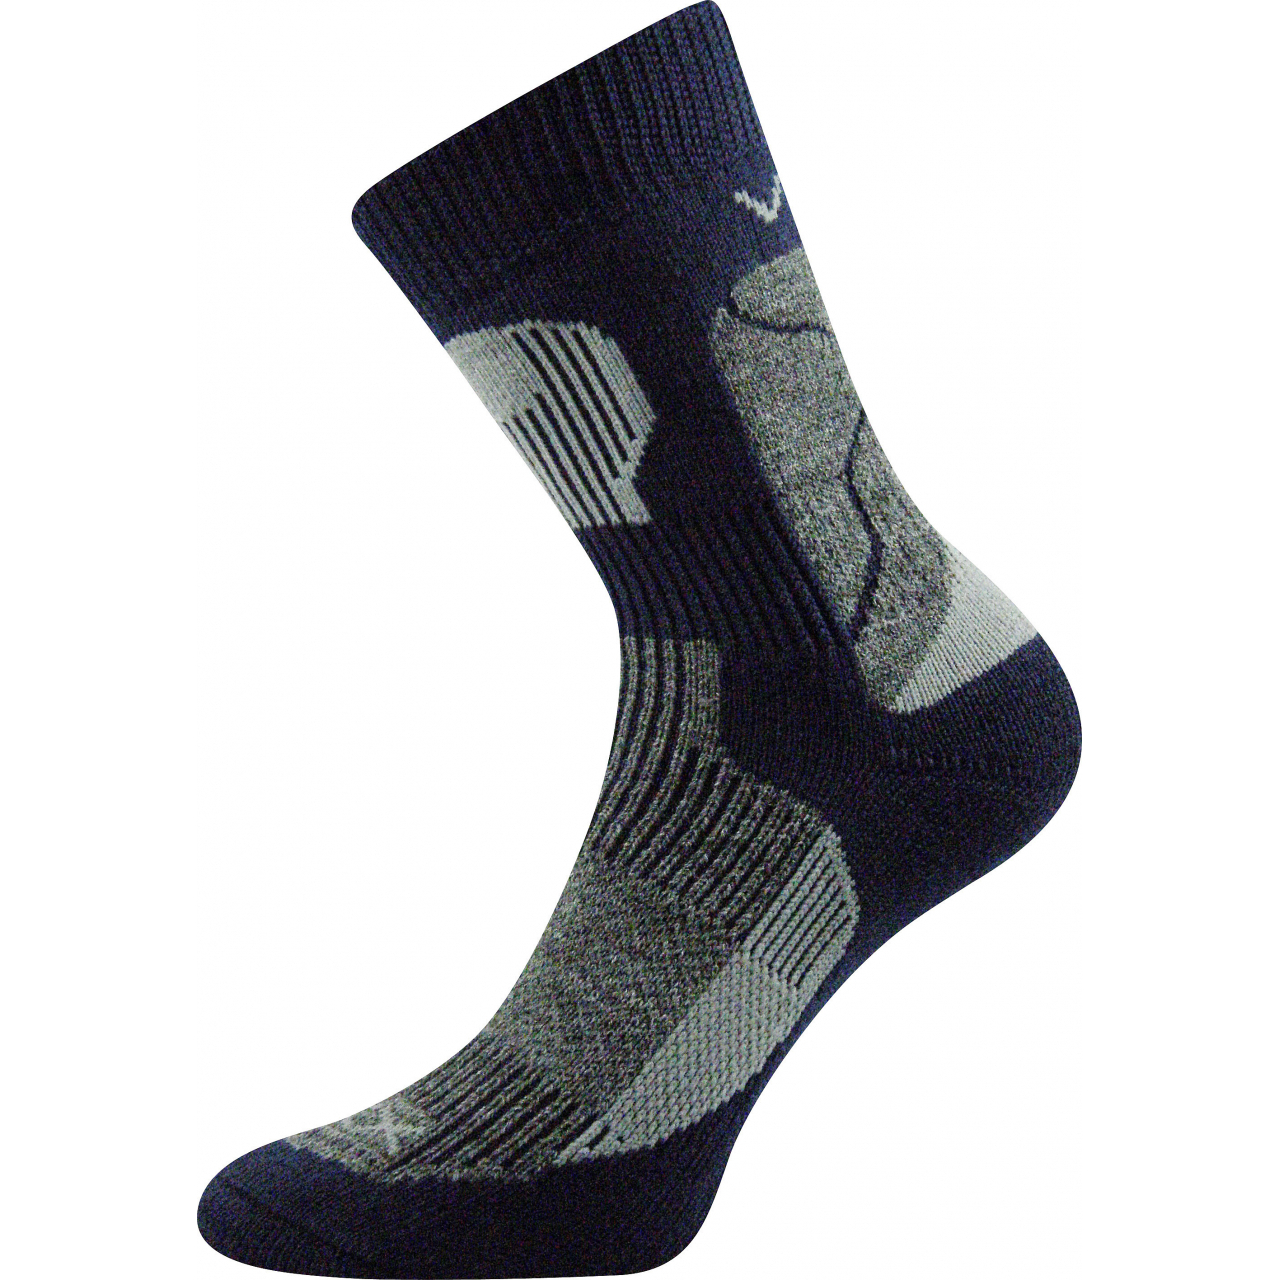 Ponožky unisex termo Voxx Treking - tmavě modré-šedé, 41-42